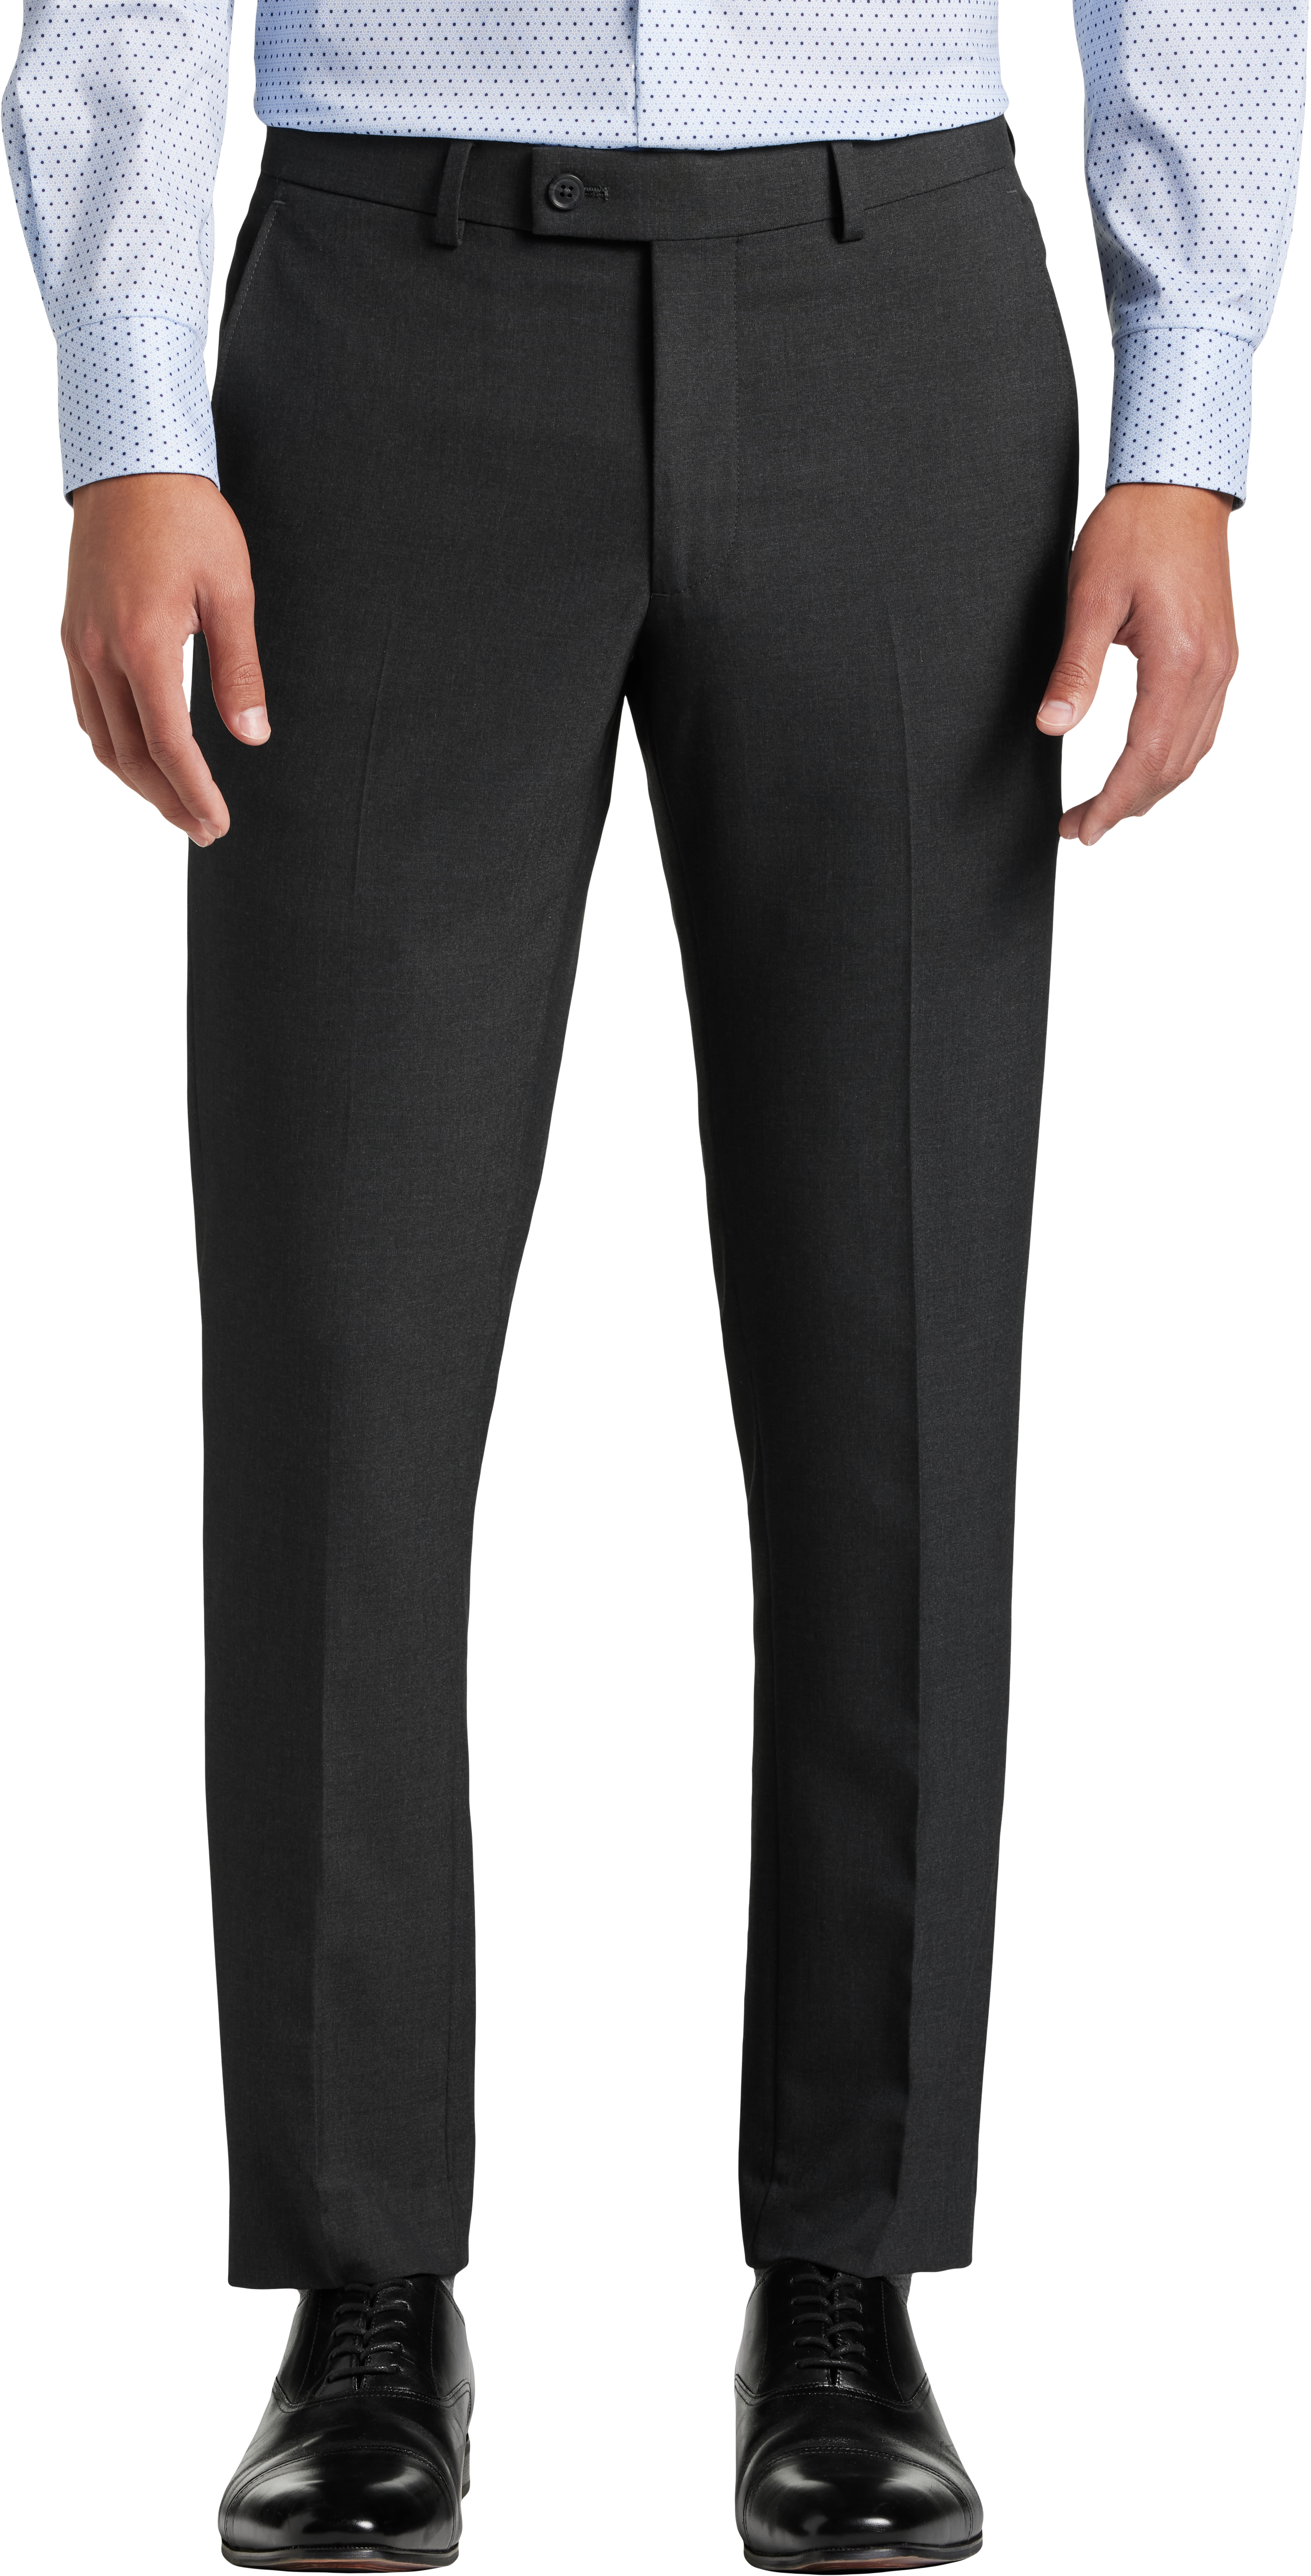 Egara Skinny Fit Suit Separates Pants, Charcoal Gray - Men's Suits ...